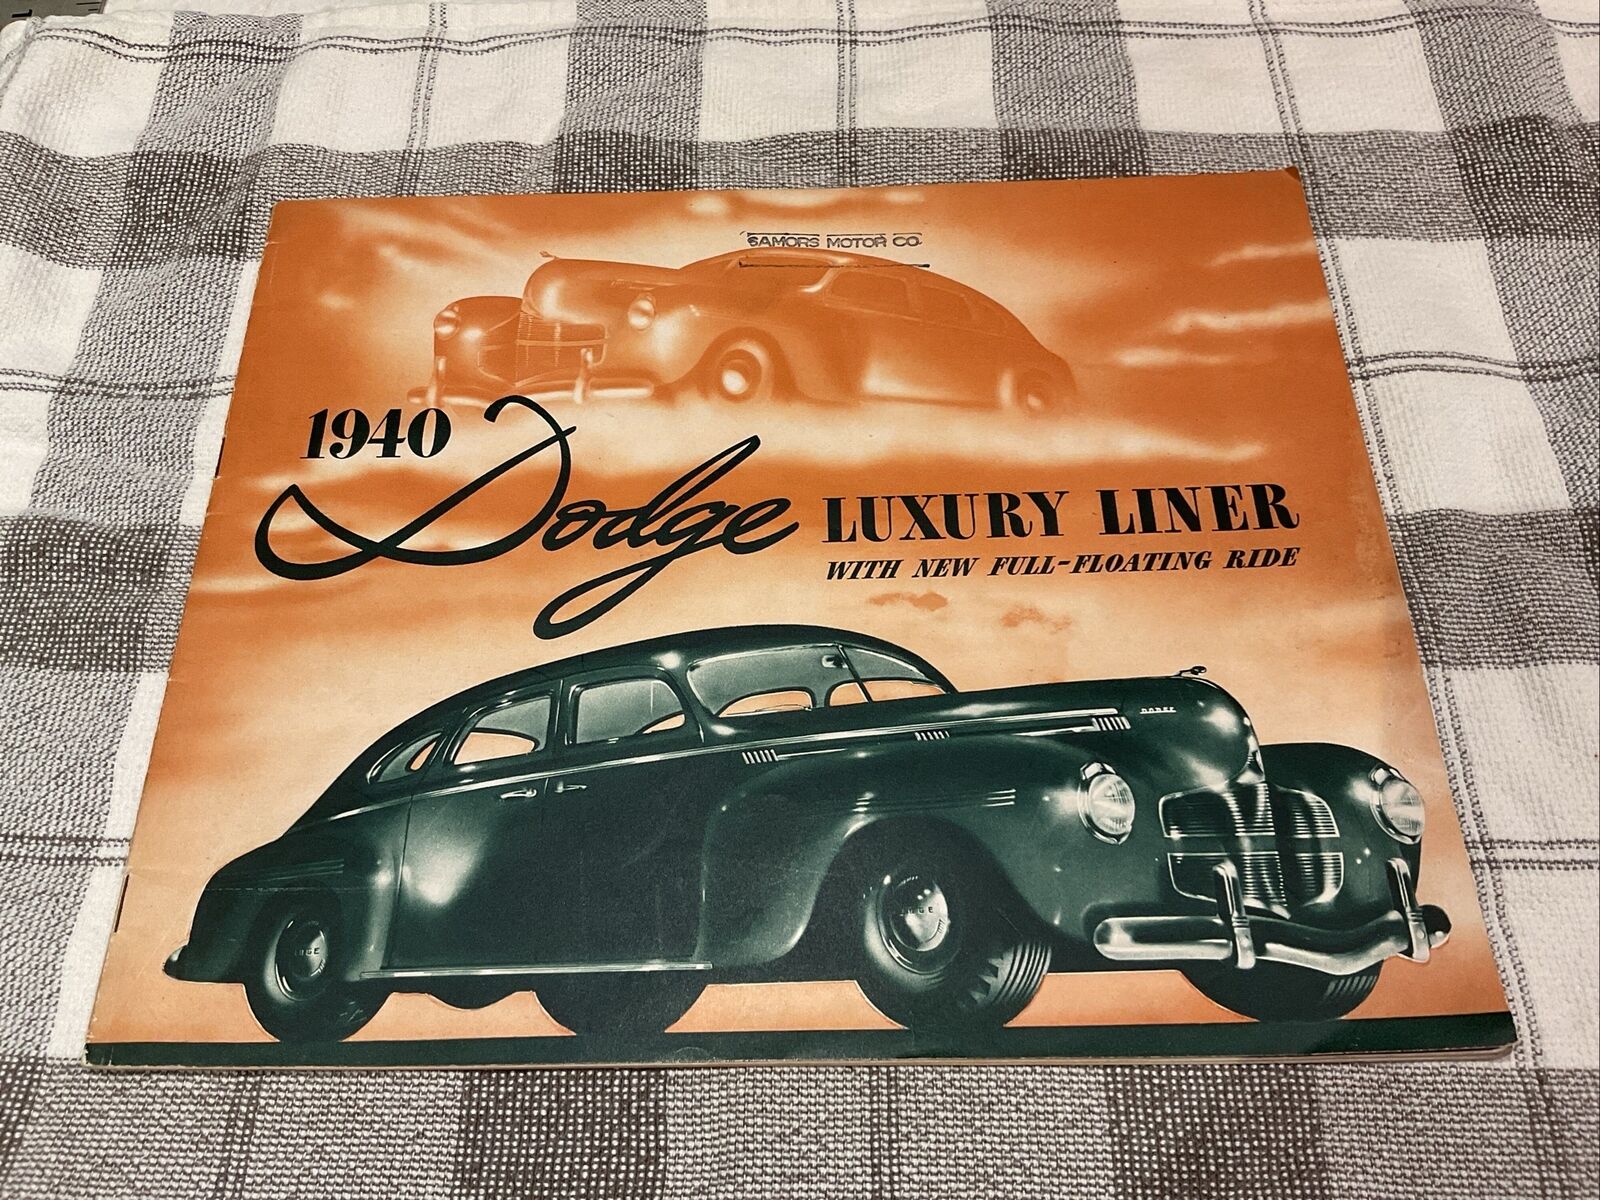 Vintage Original Automobile Sales Brochure - 1940 Dodge Luxury Liner